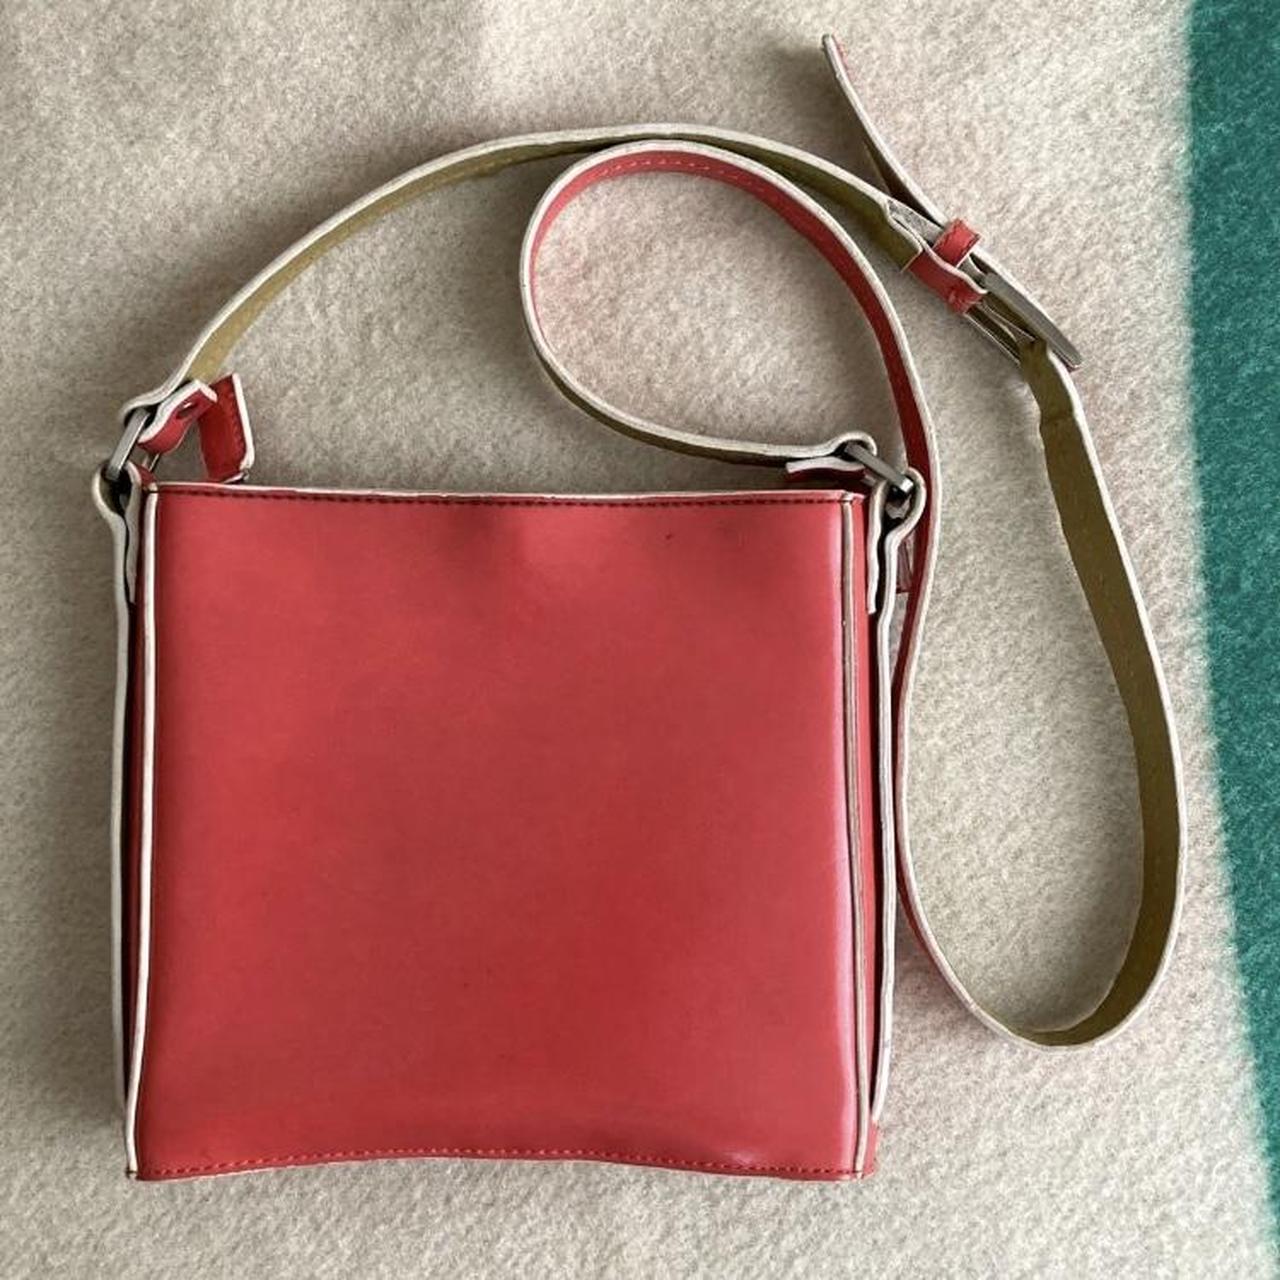 NWT Isabelle Handbag Small Black Vegan Leather w/ - Depop